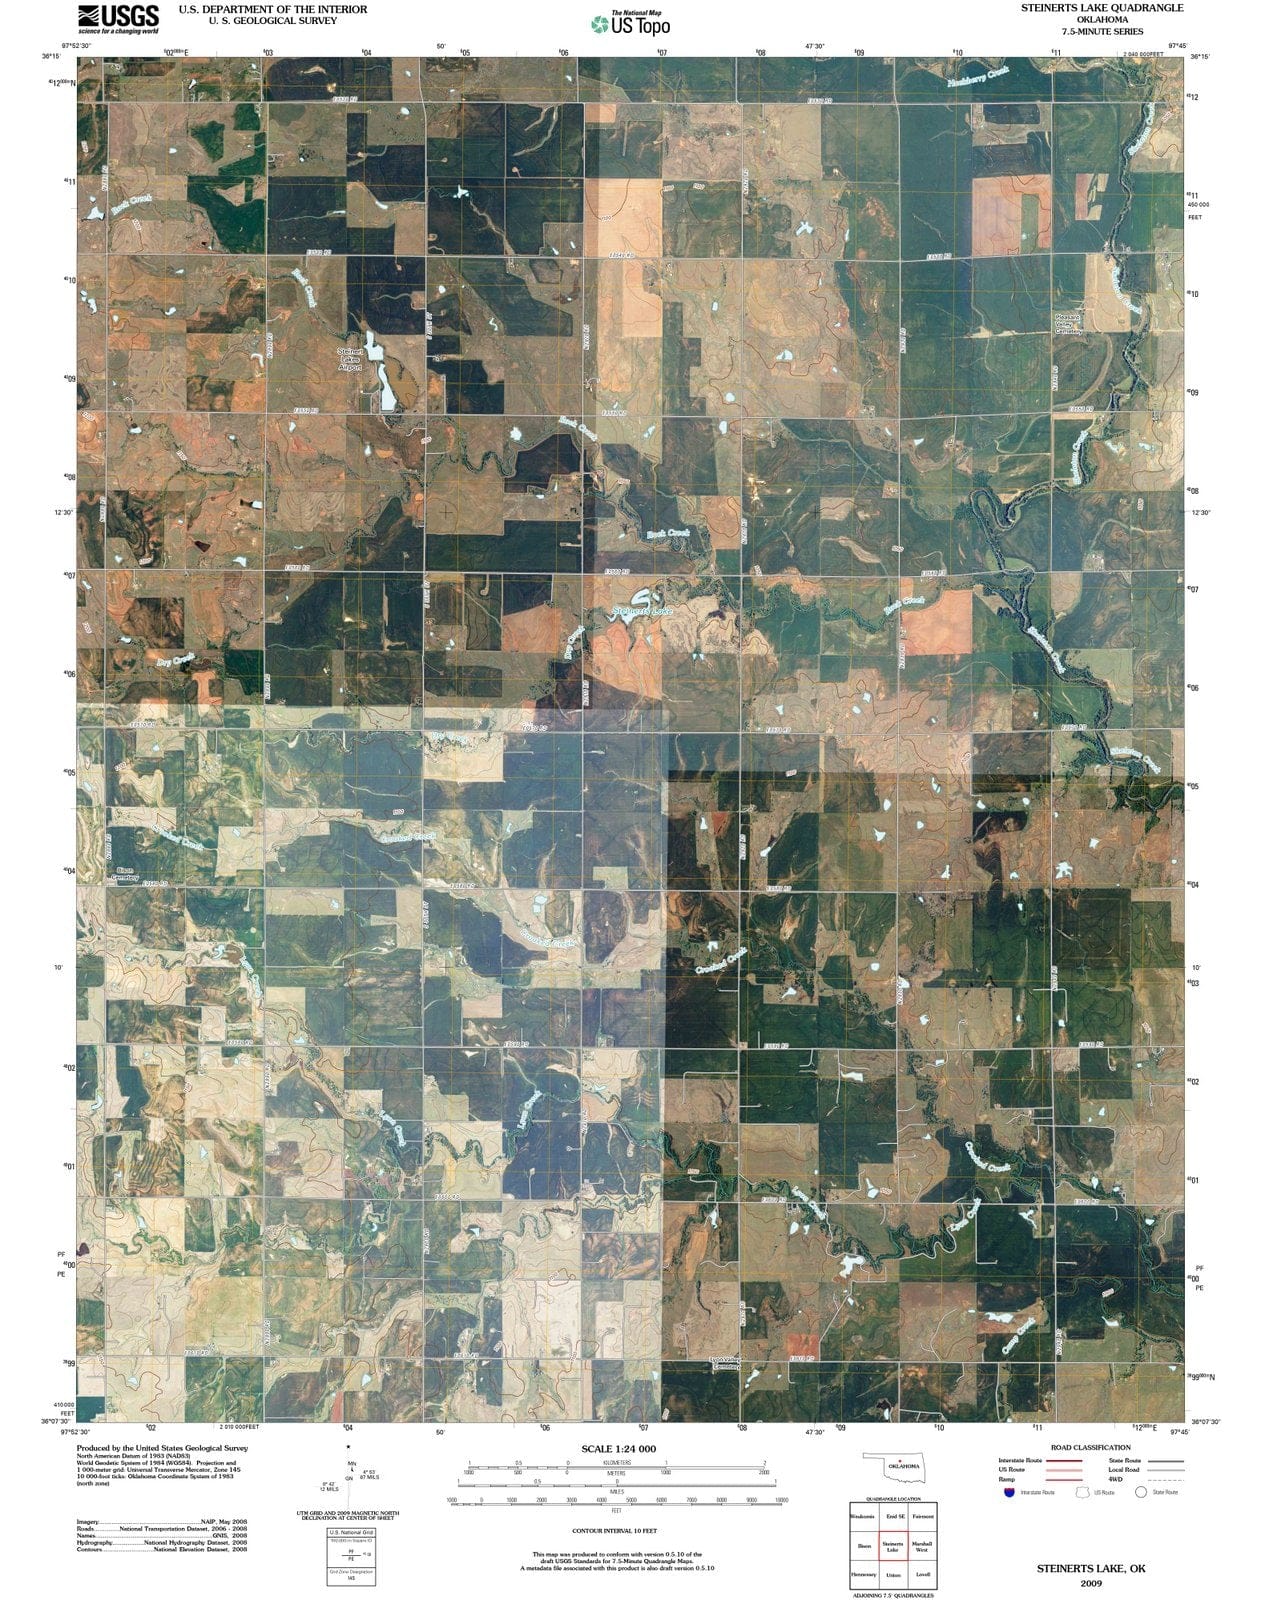 2009 Steinerts Lake, OK - Oklahoma - USGS Topographic Map